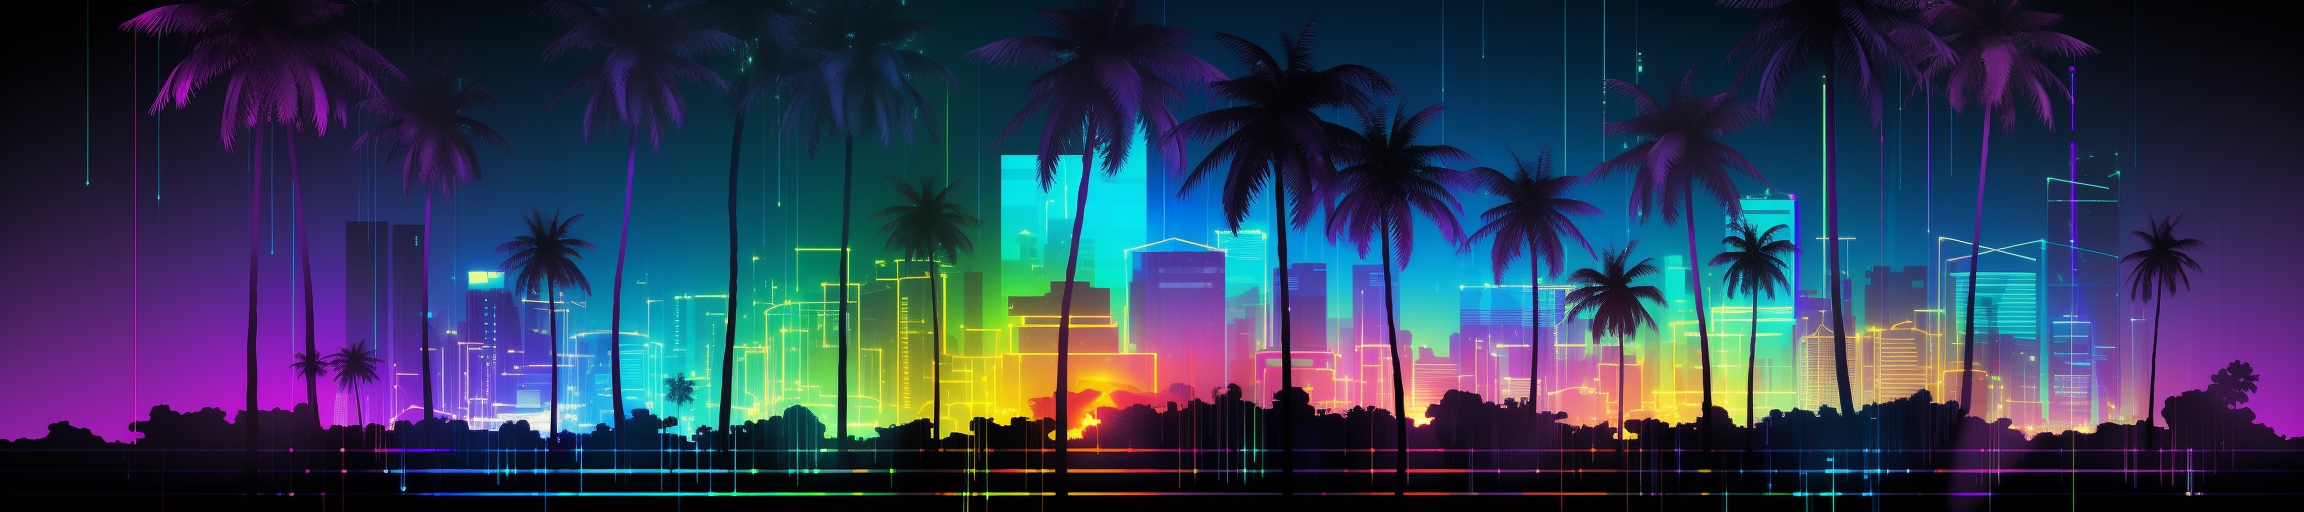 Banner image depicting a tropic digital city